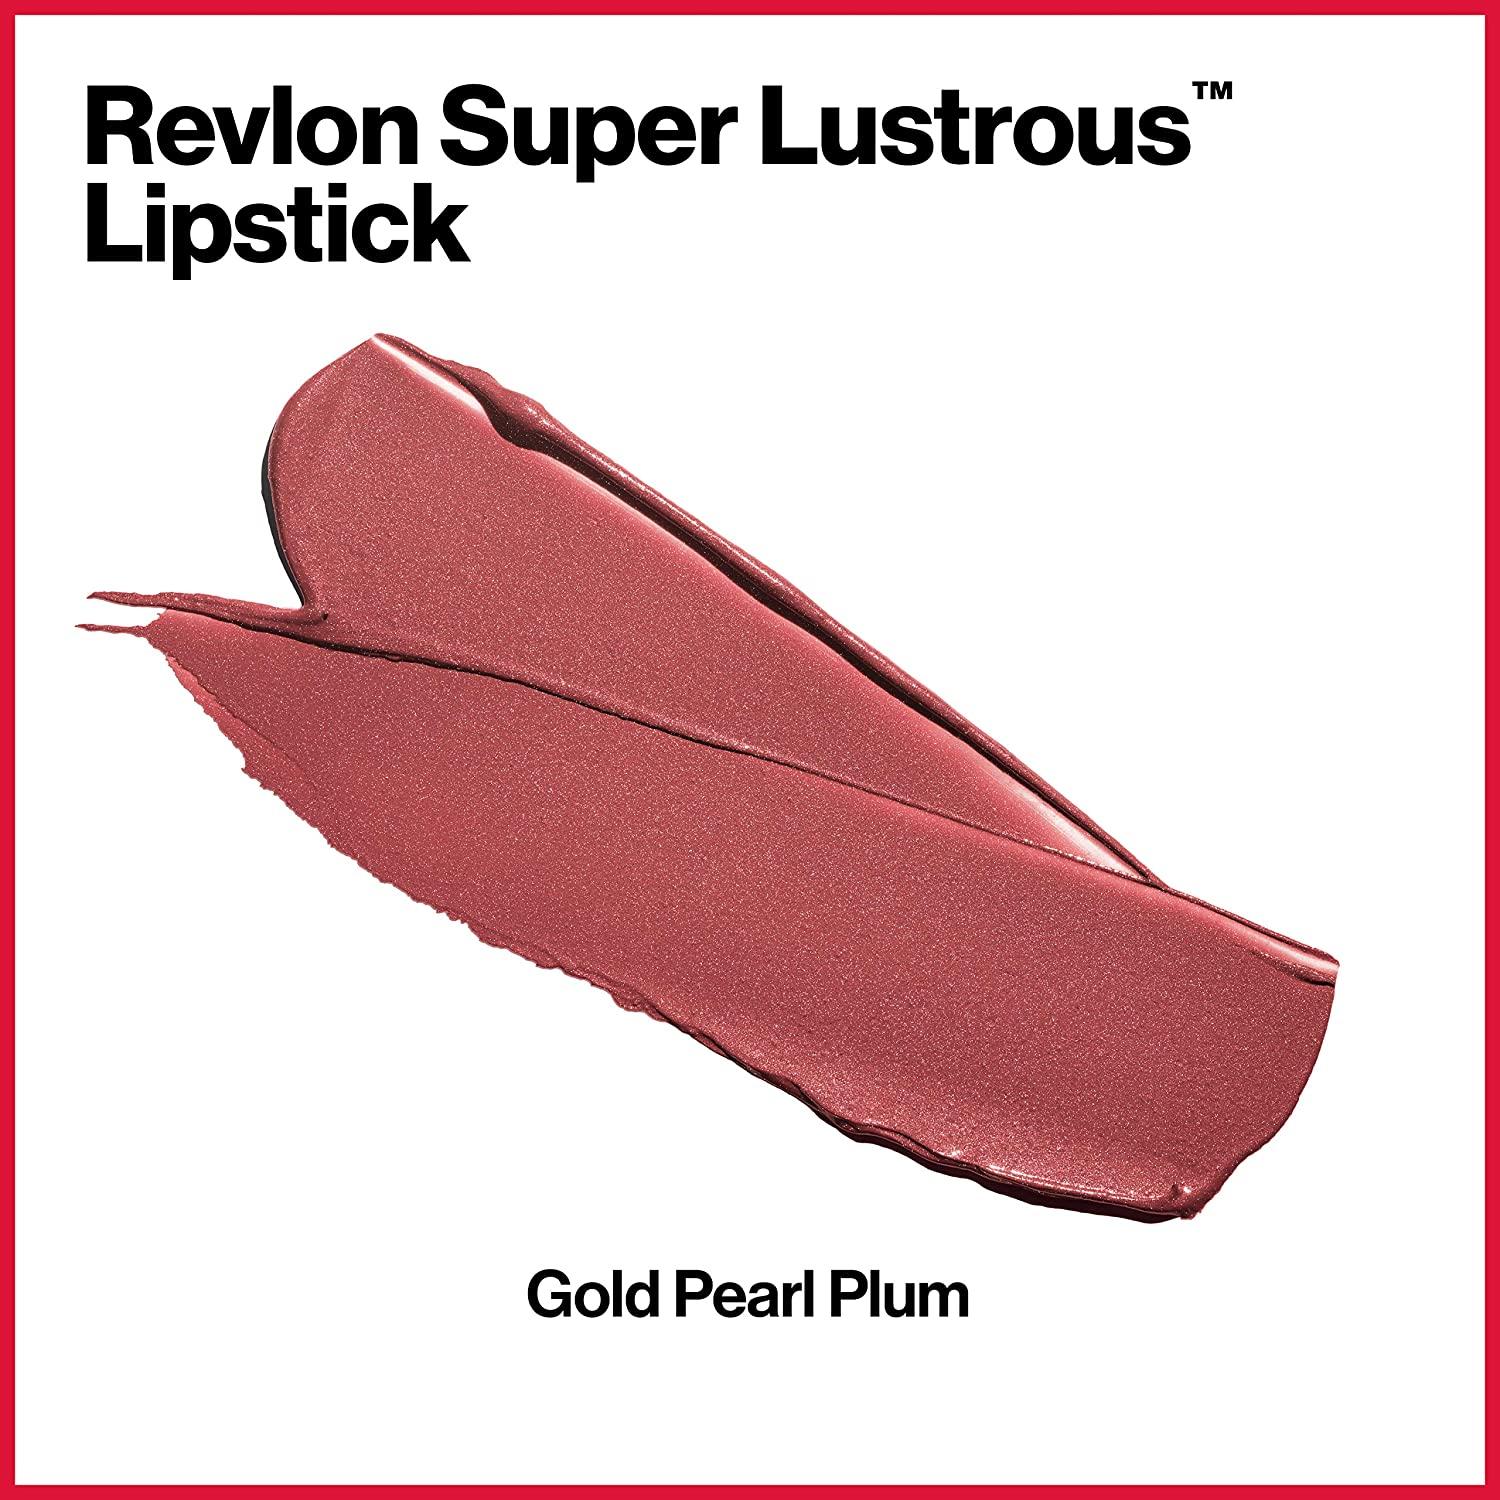 Revlon Super Lustrous Lipstick Pearl 610 Goldpearl Plum 015 Oz 42 G